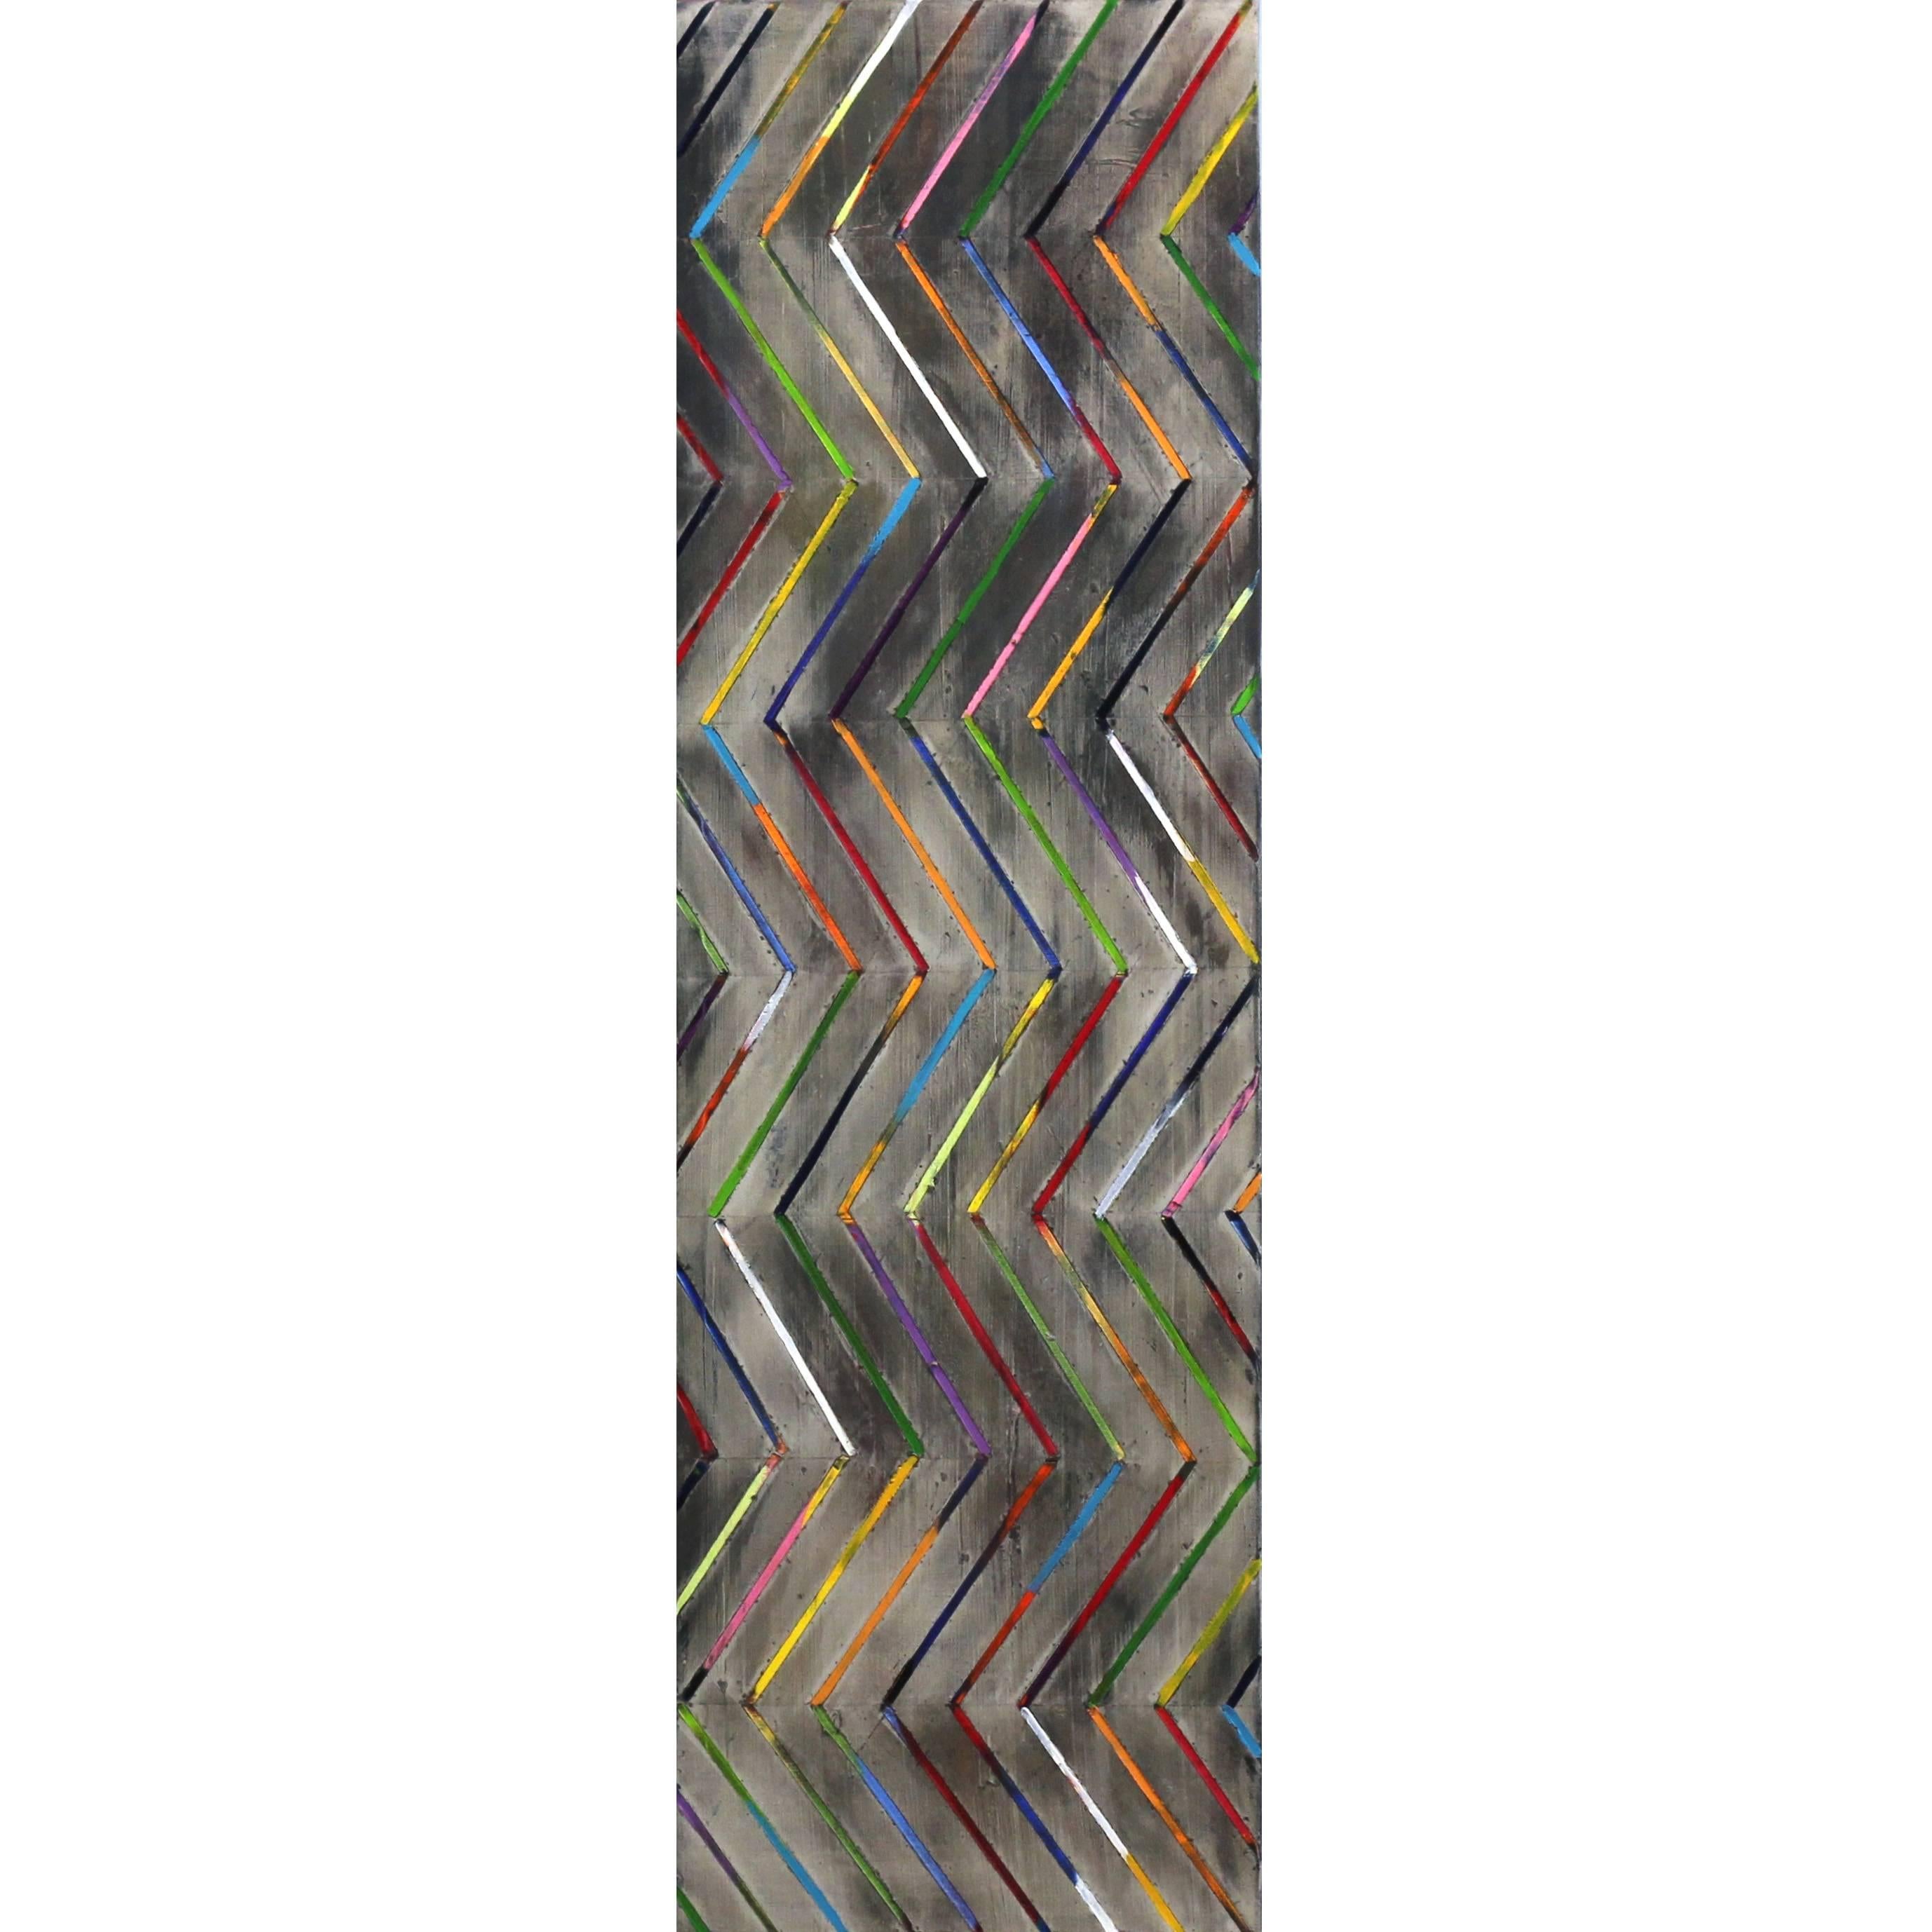 Petra Rös-Nickel Abstract Painting – Zig Zag 16-3-2 - Original farbenfrohes Ölgemälde mit Streifen mit Textur